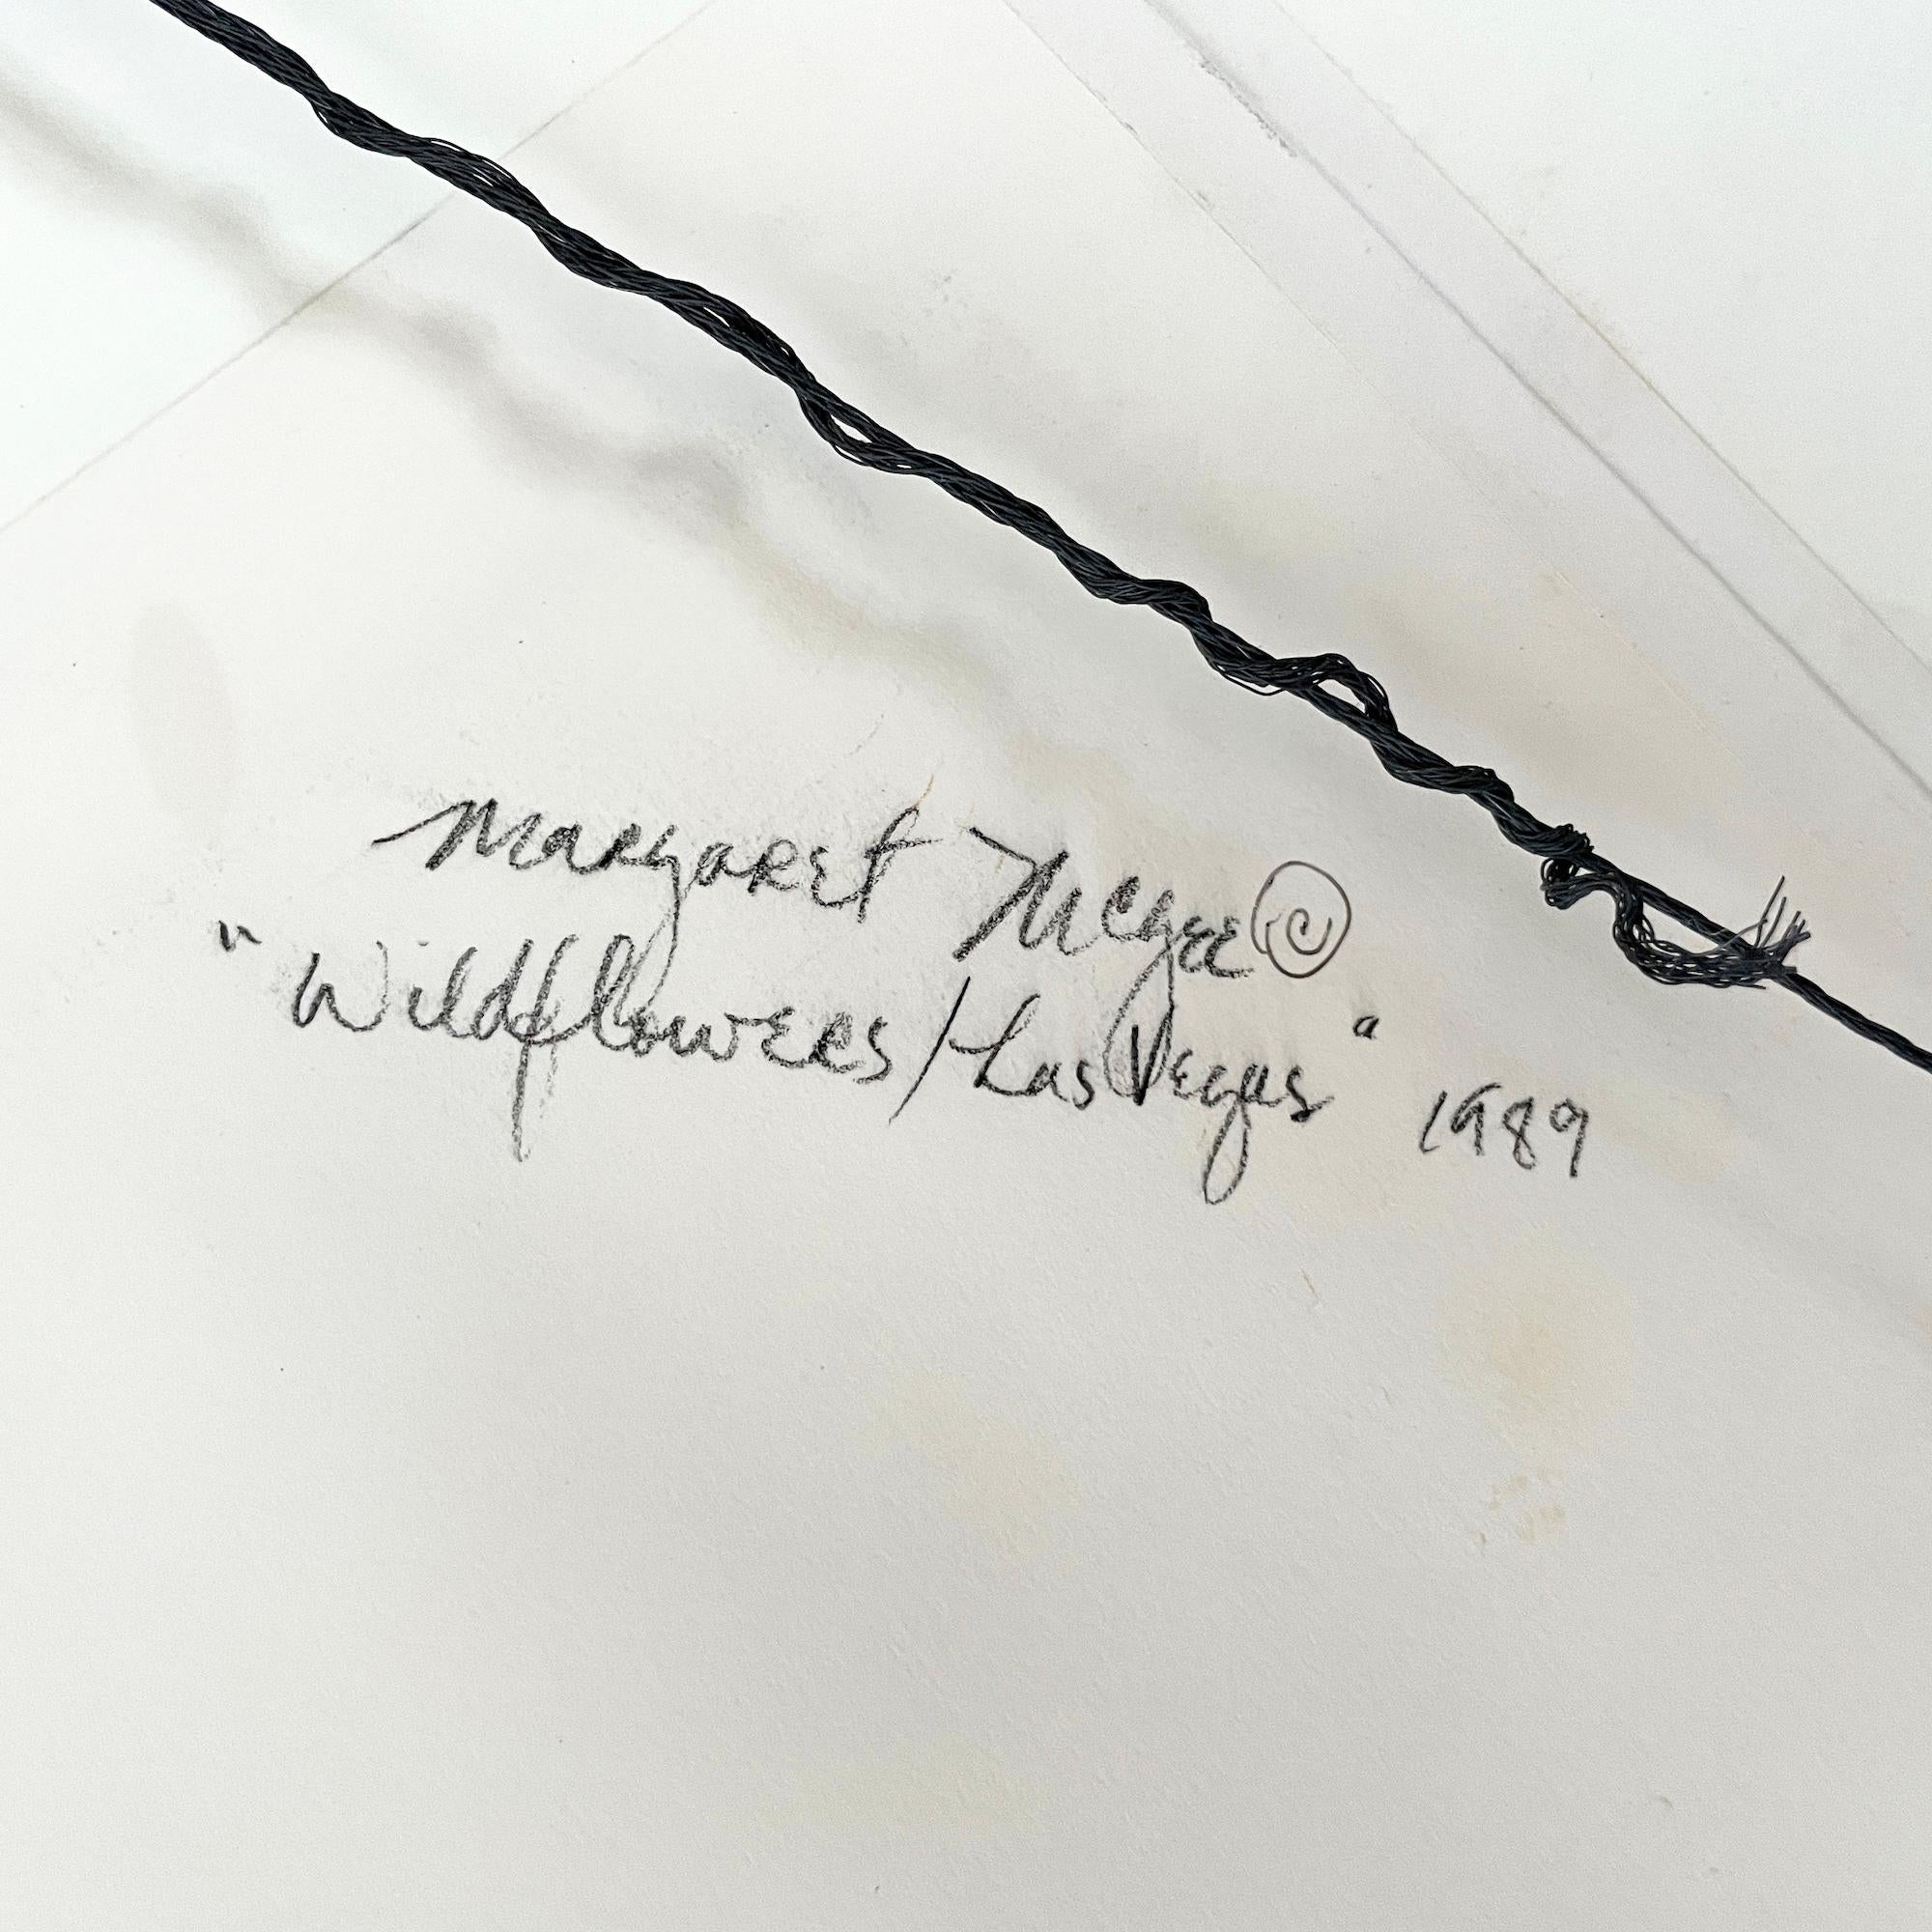 Margaret McGee „Wildflowers/Las Vegas“, Öl auf Papier, Margaret McGee, 1989 im Angebot 3